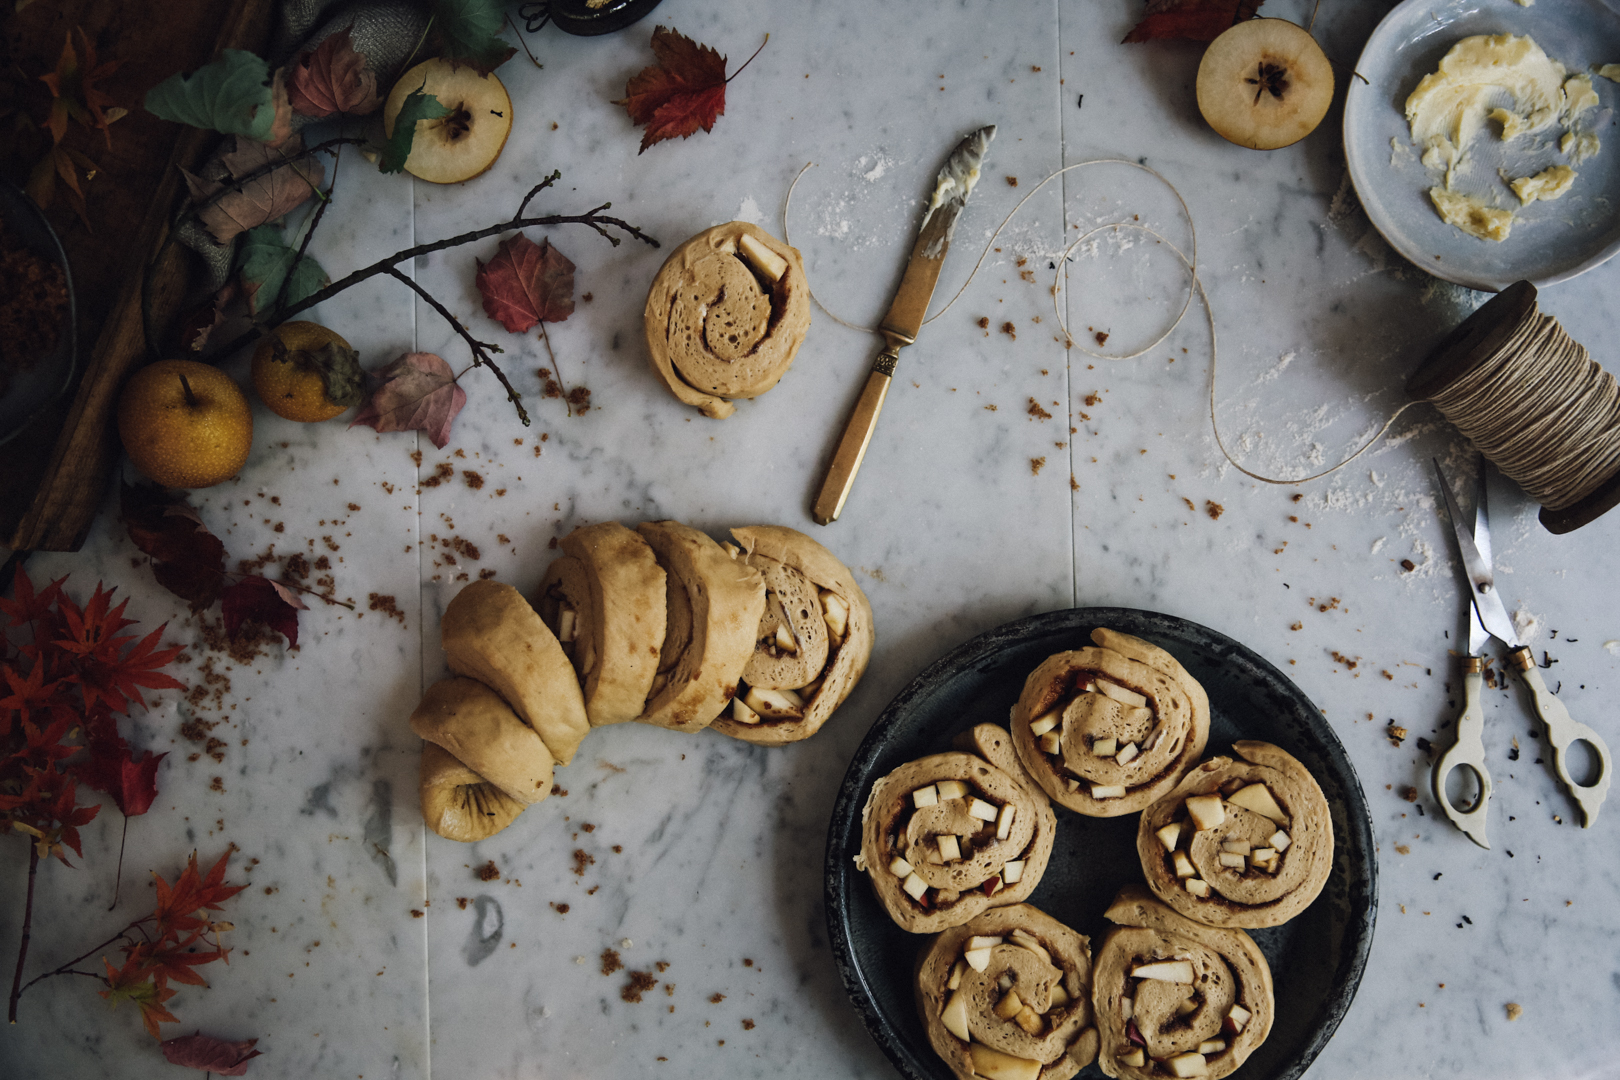 spiced-autumn-cinnamon-rolls-photography-styling-recipe-by-christiann-koepke-of-christiannkoepke-com-10